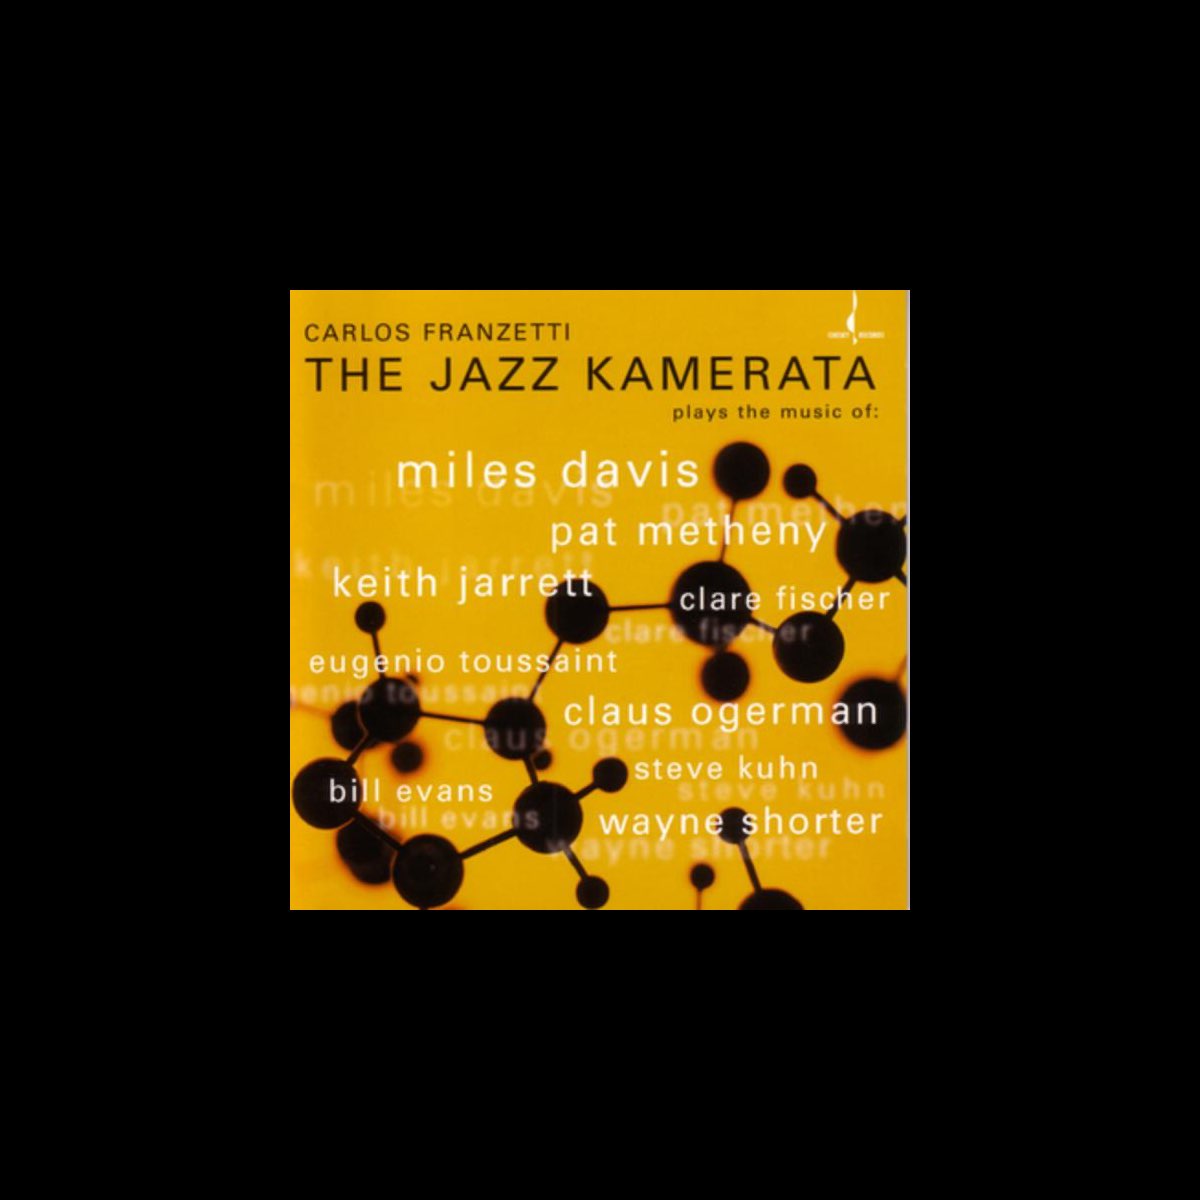 The Jazz Kamerata - Album by Carlos Franzetti - Apple Music